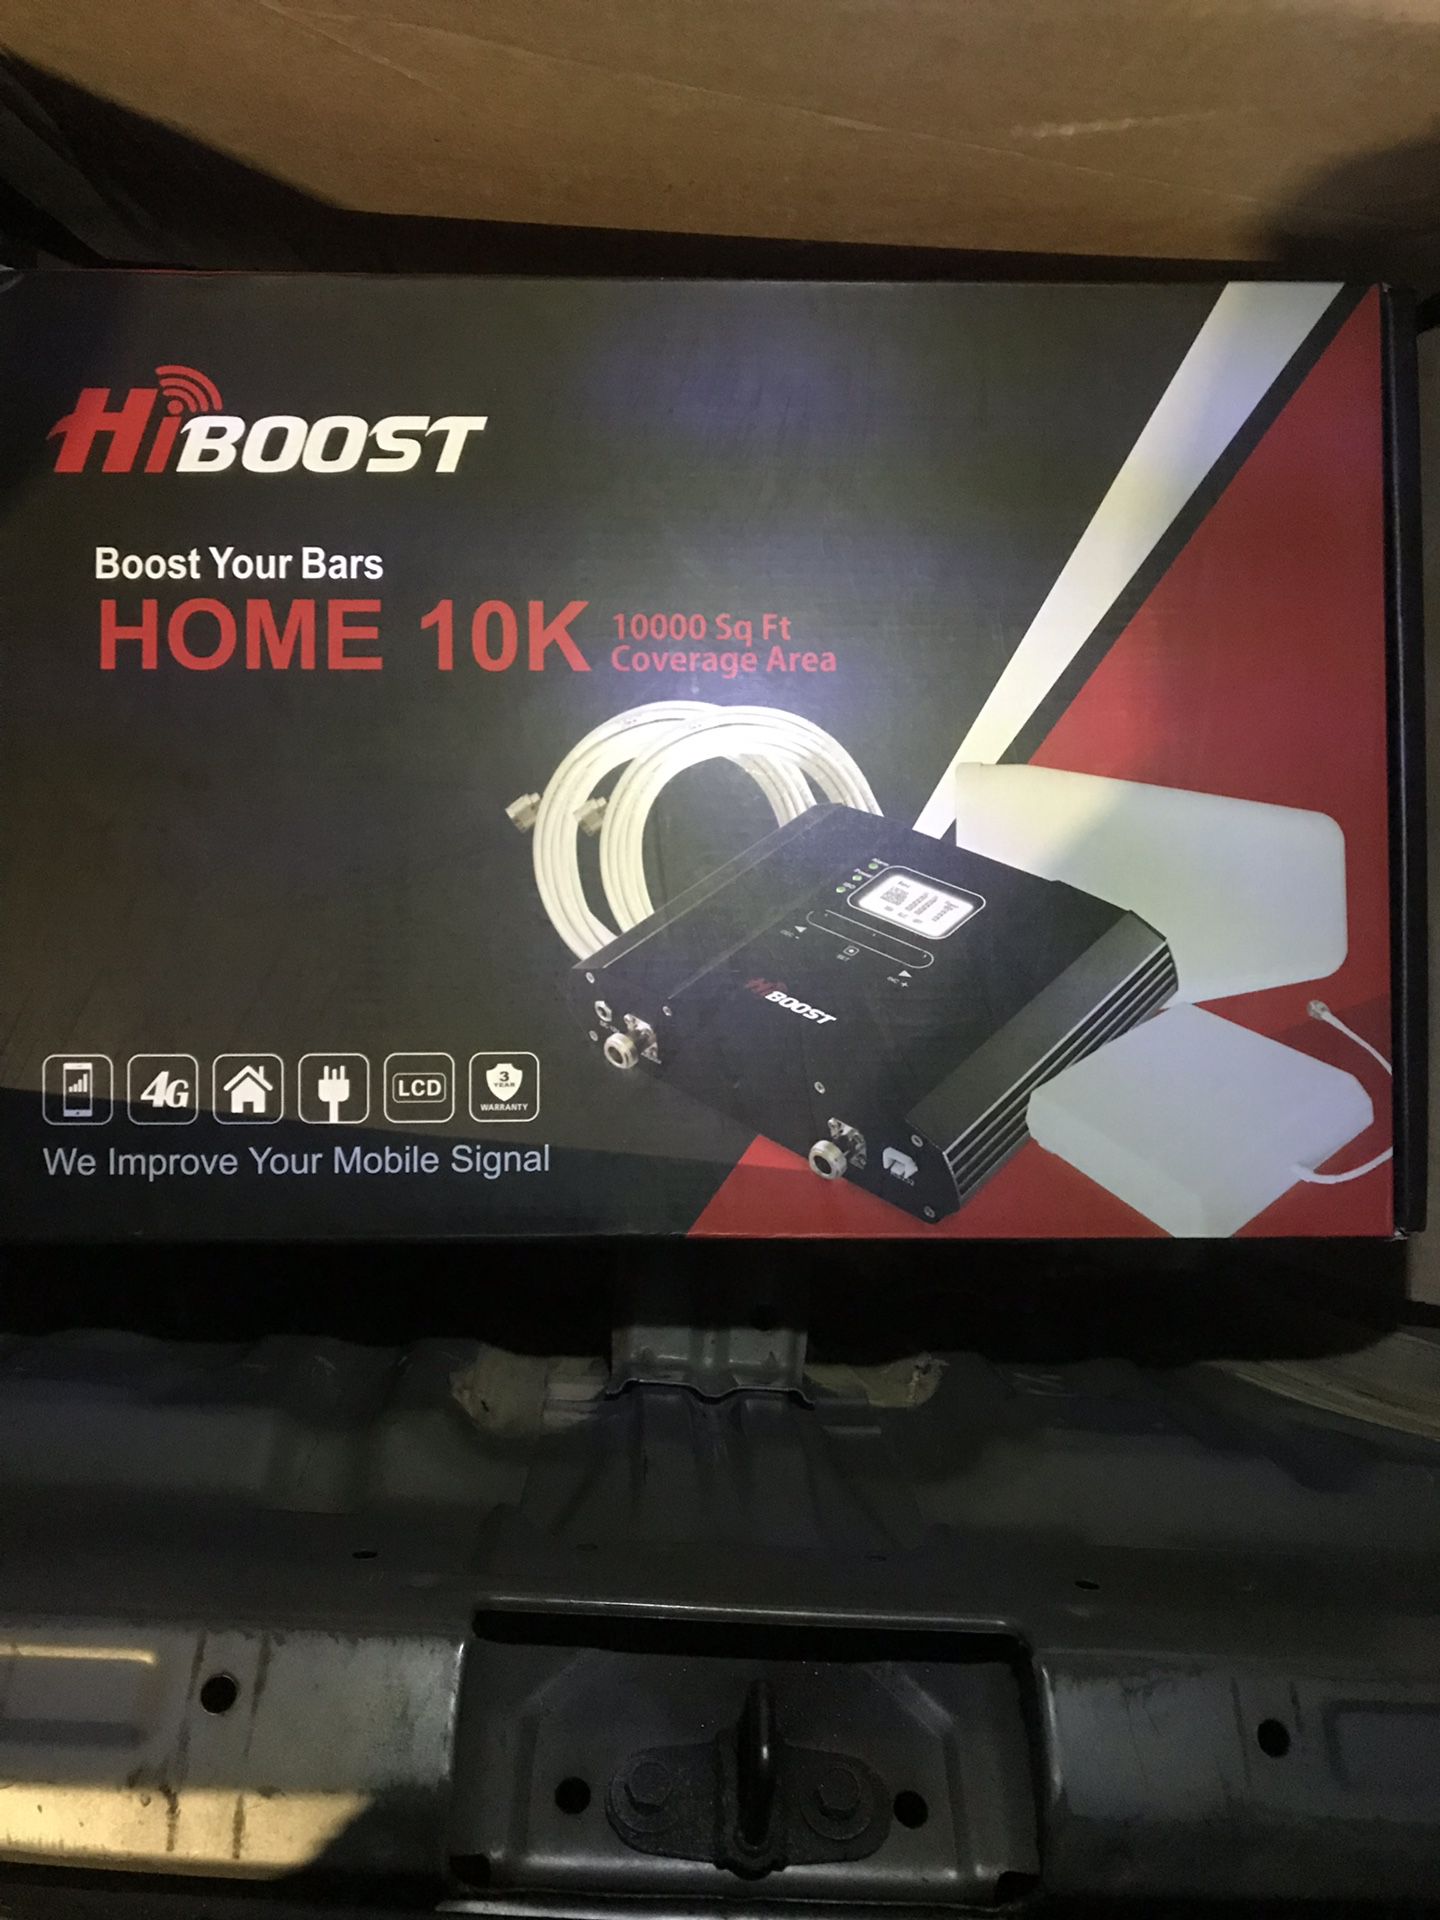 HiBoost Home 10k